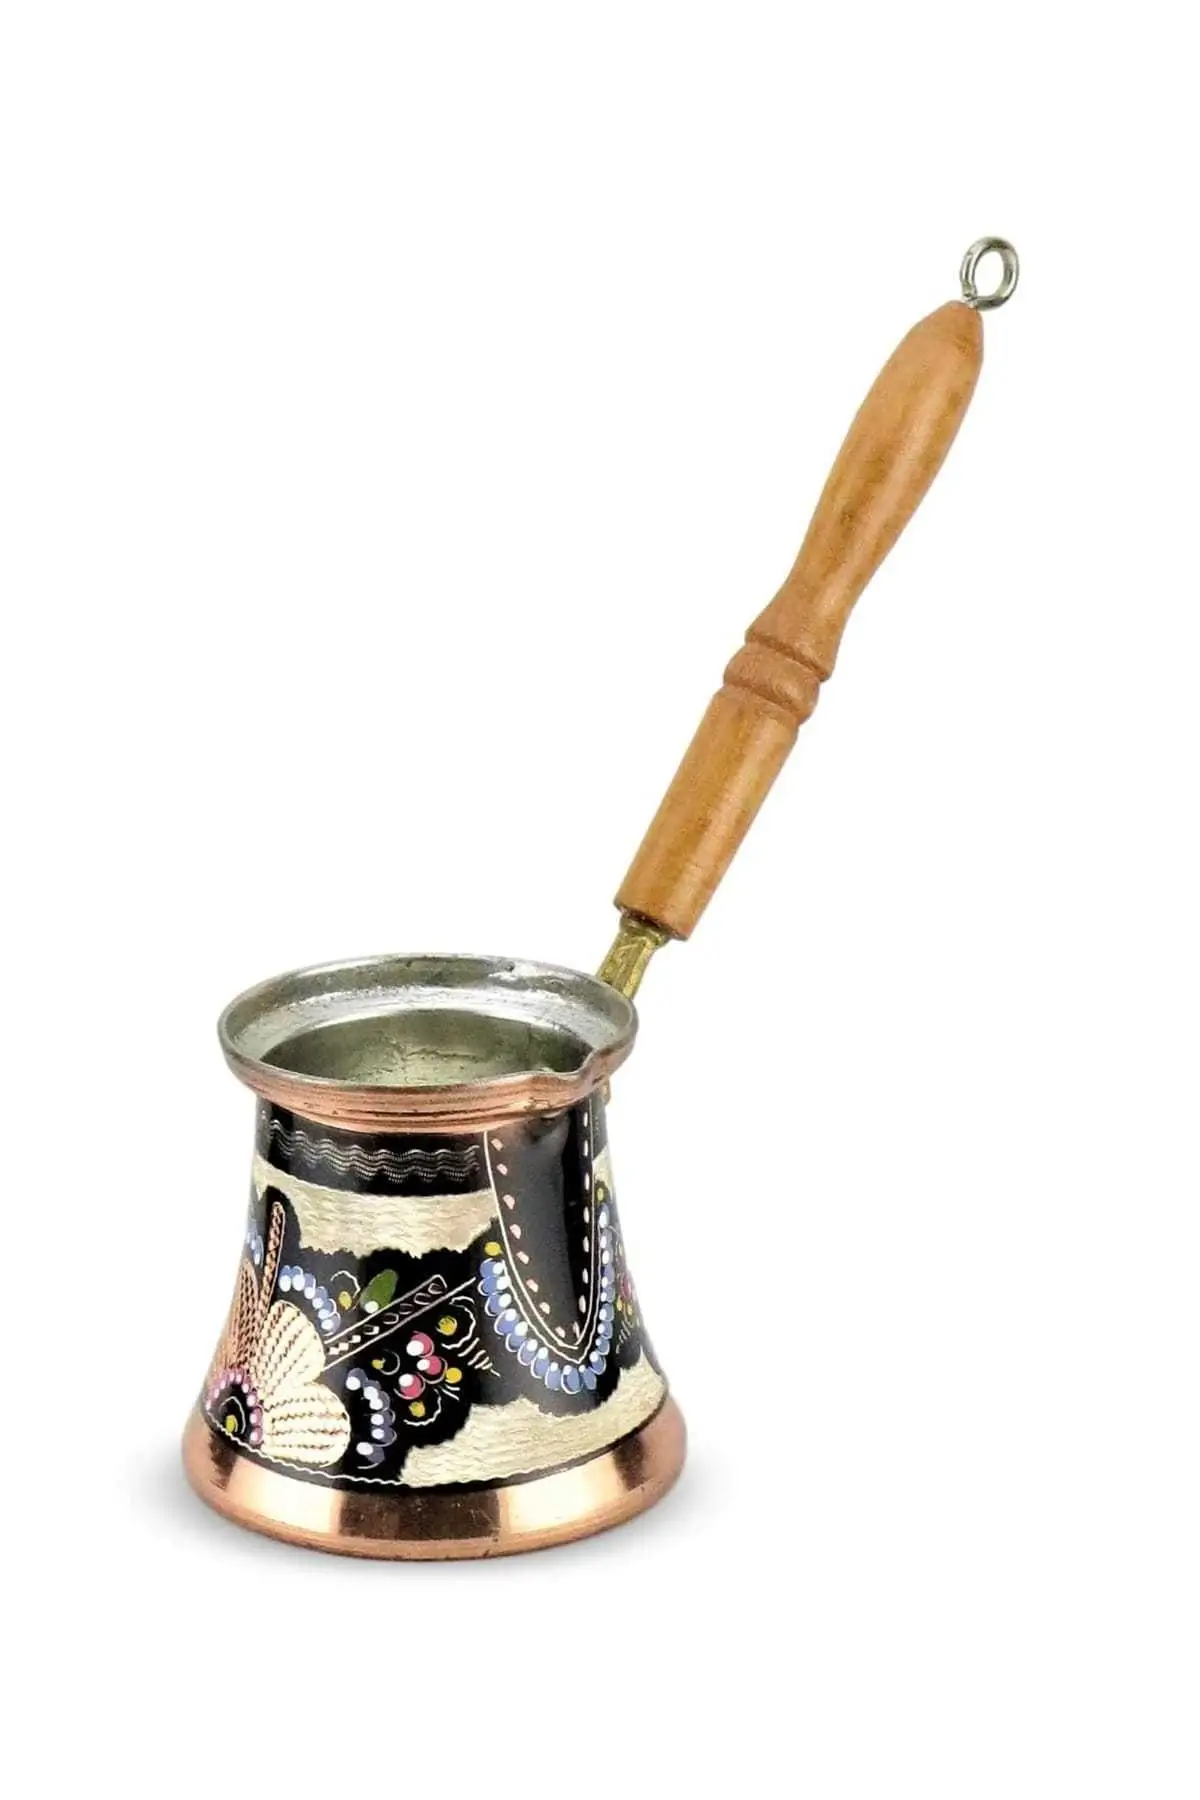 Turkish Copper Coffee Pot Handmade Traditional Design Engraved Wooden Handle Inlaid Ottoman Arabic Coffee Espresso Pots free shi